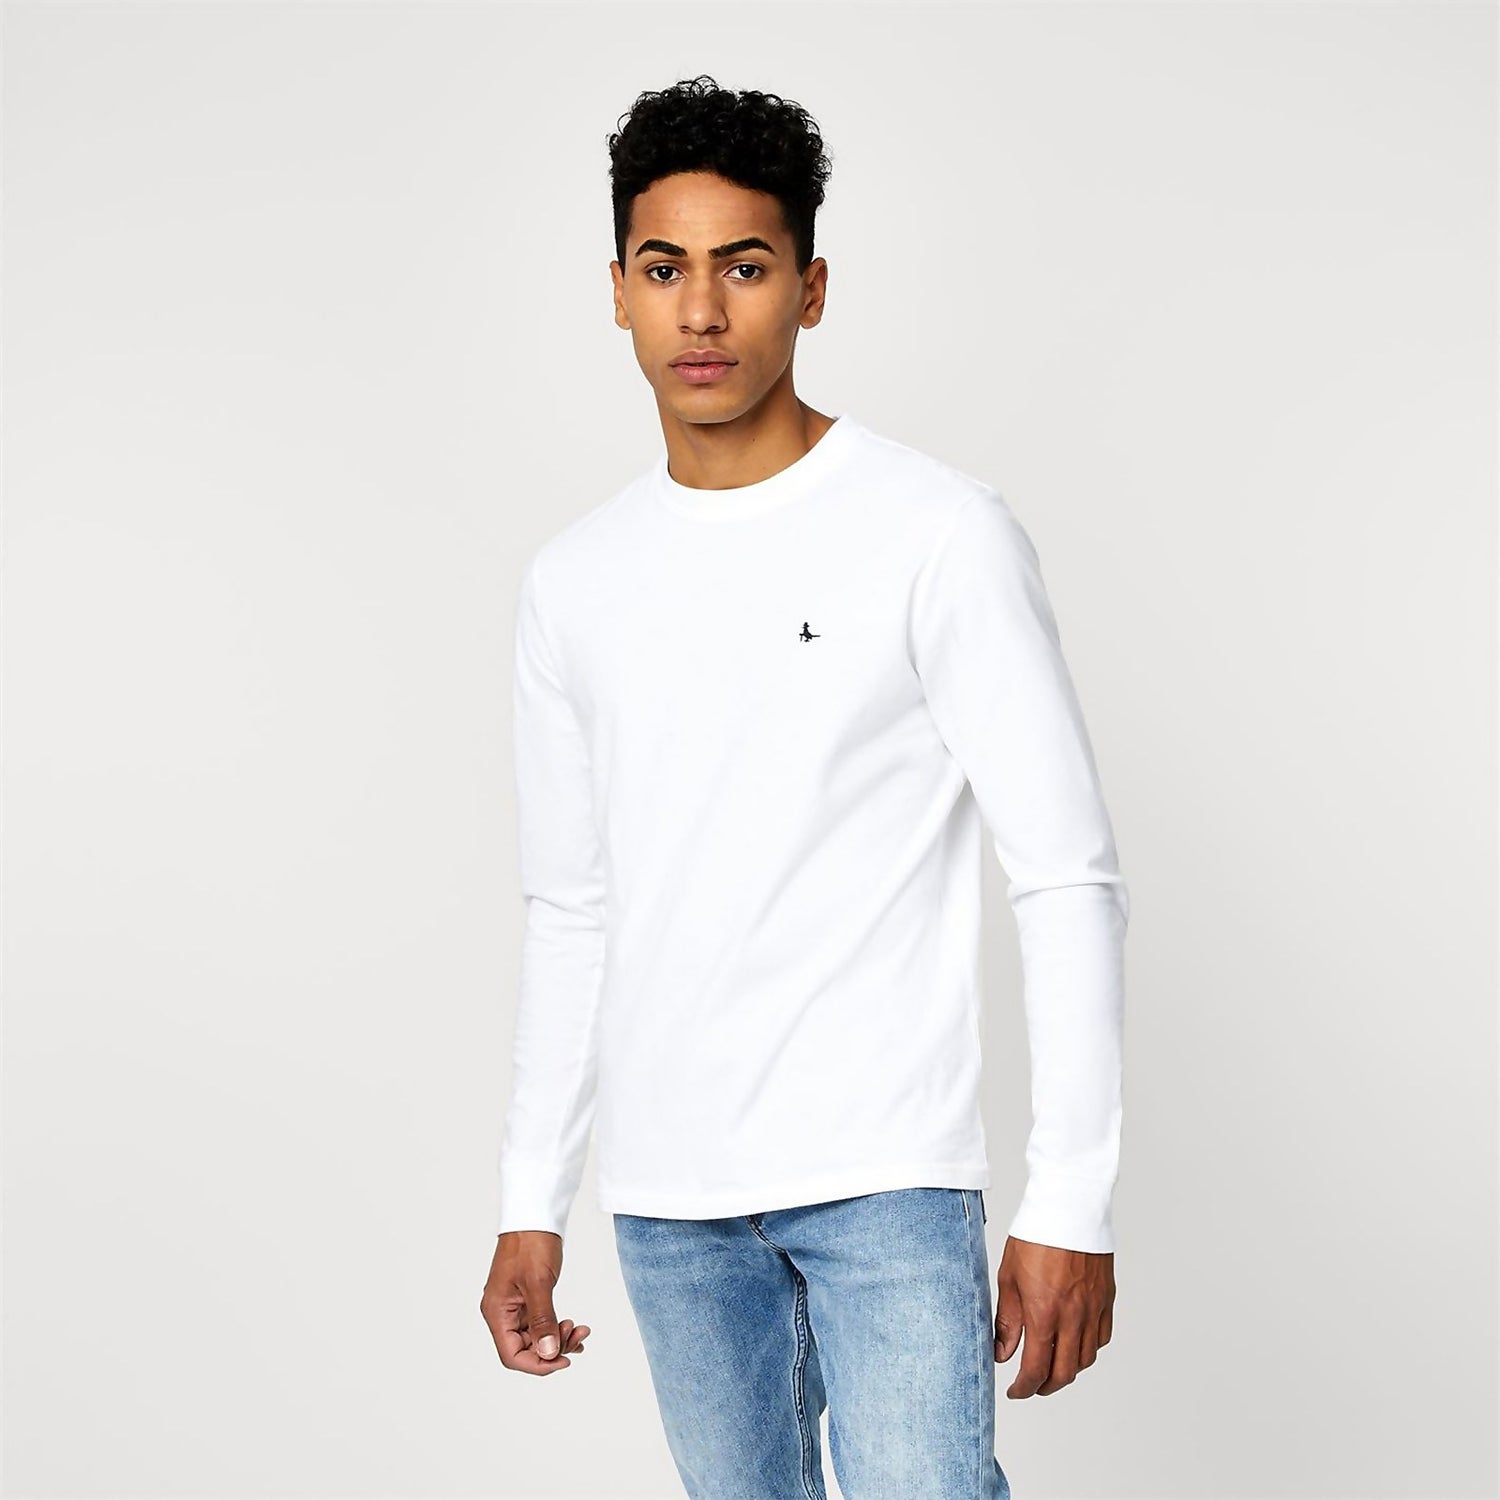 Long Sleeve Sandleford T-Shirt - White